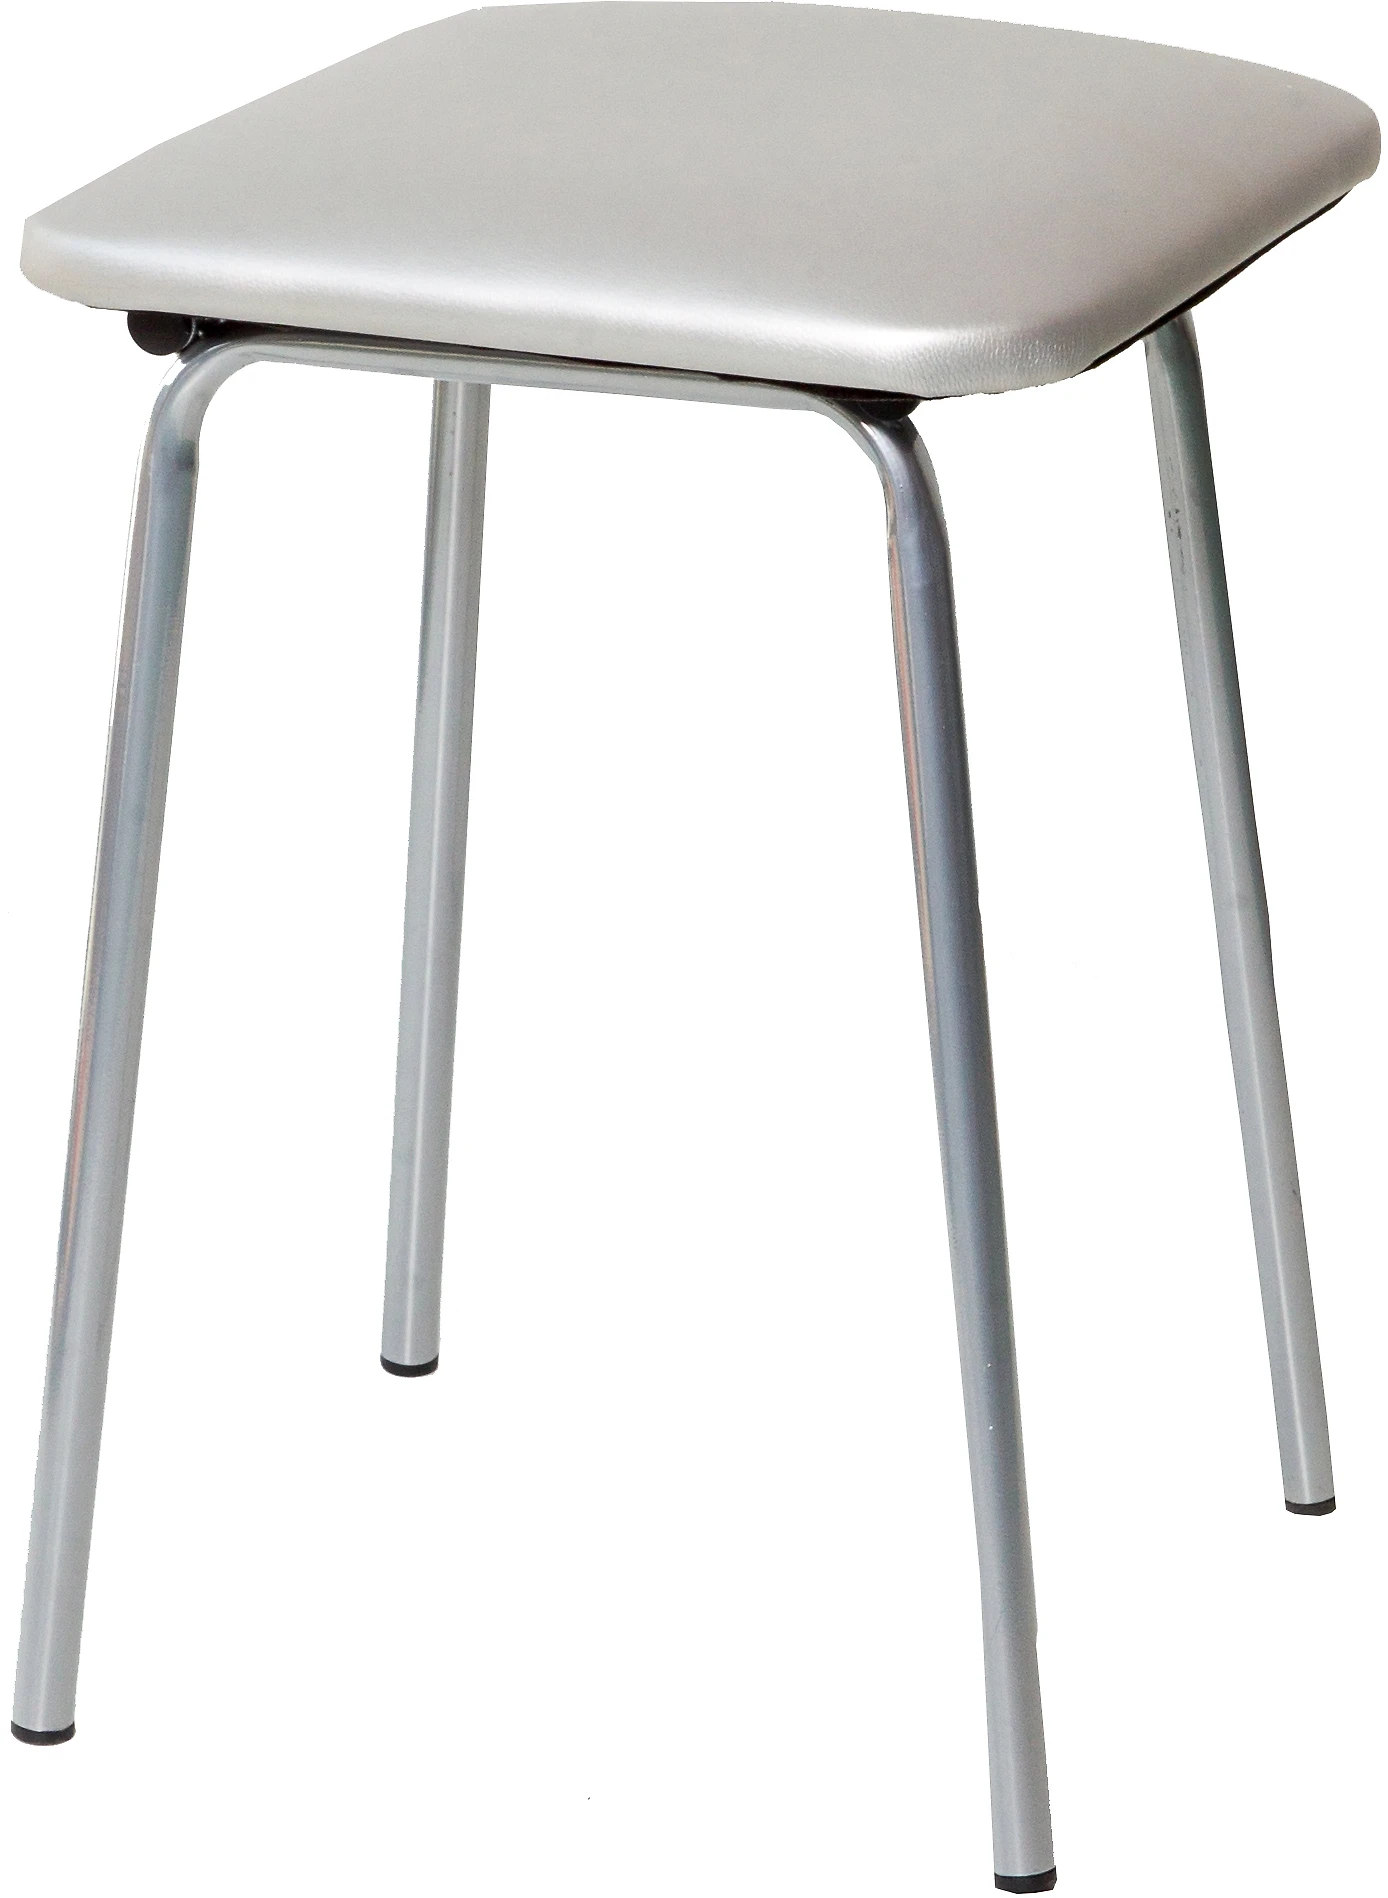 Кухонный стул Практик С-116